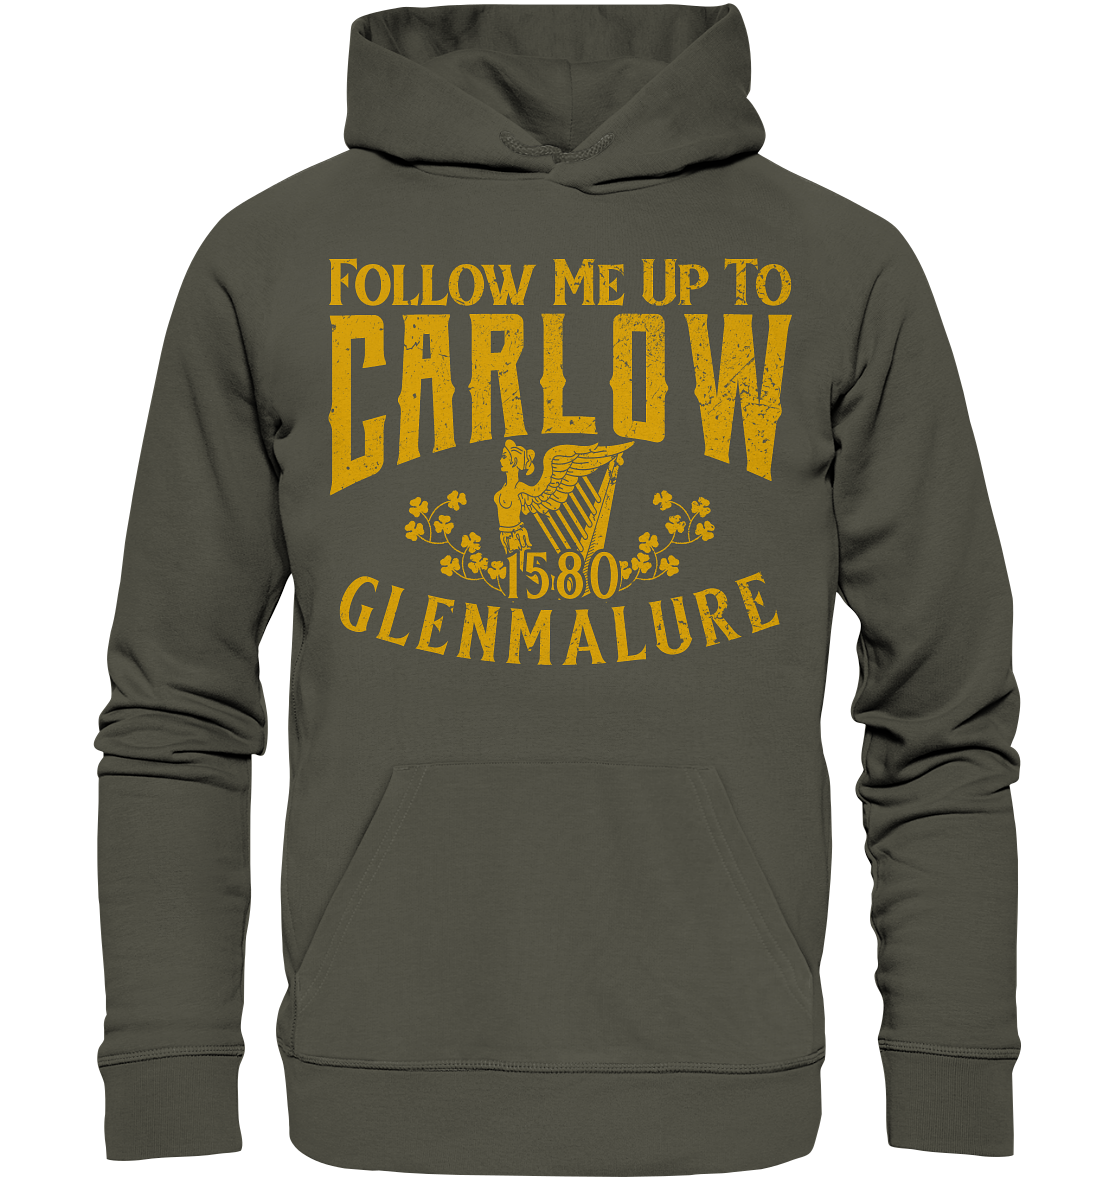 Follow Me Up To Carlow - Organic Hoodie